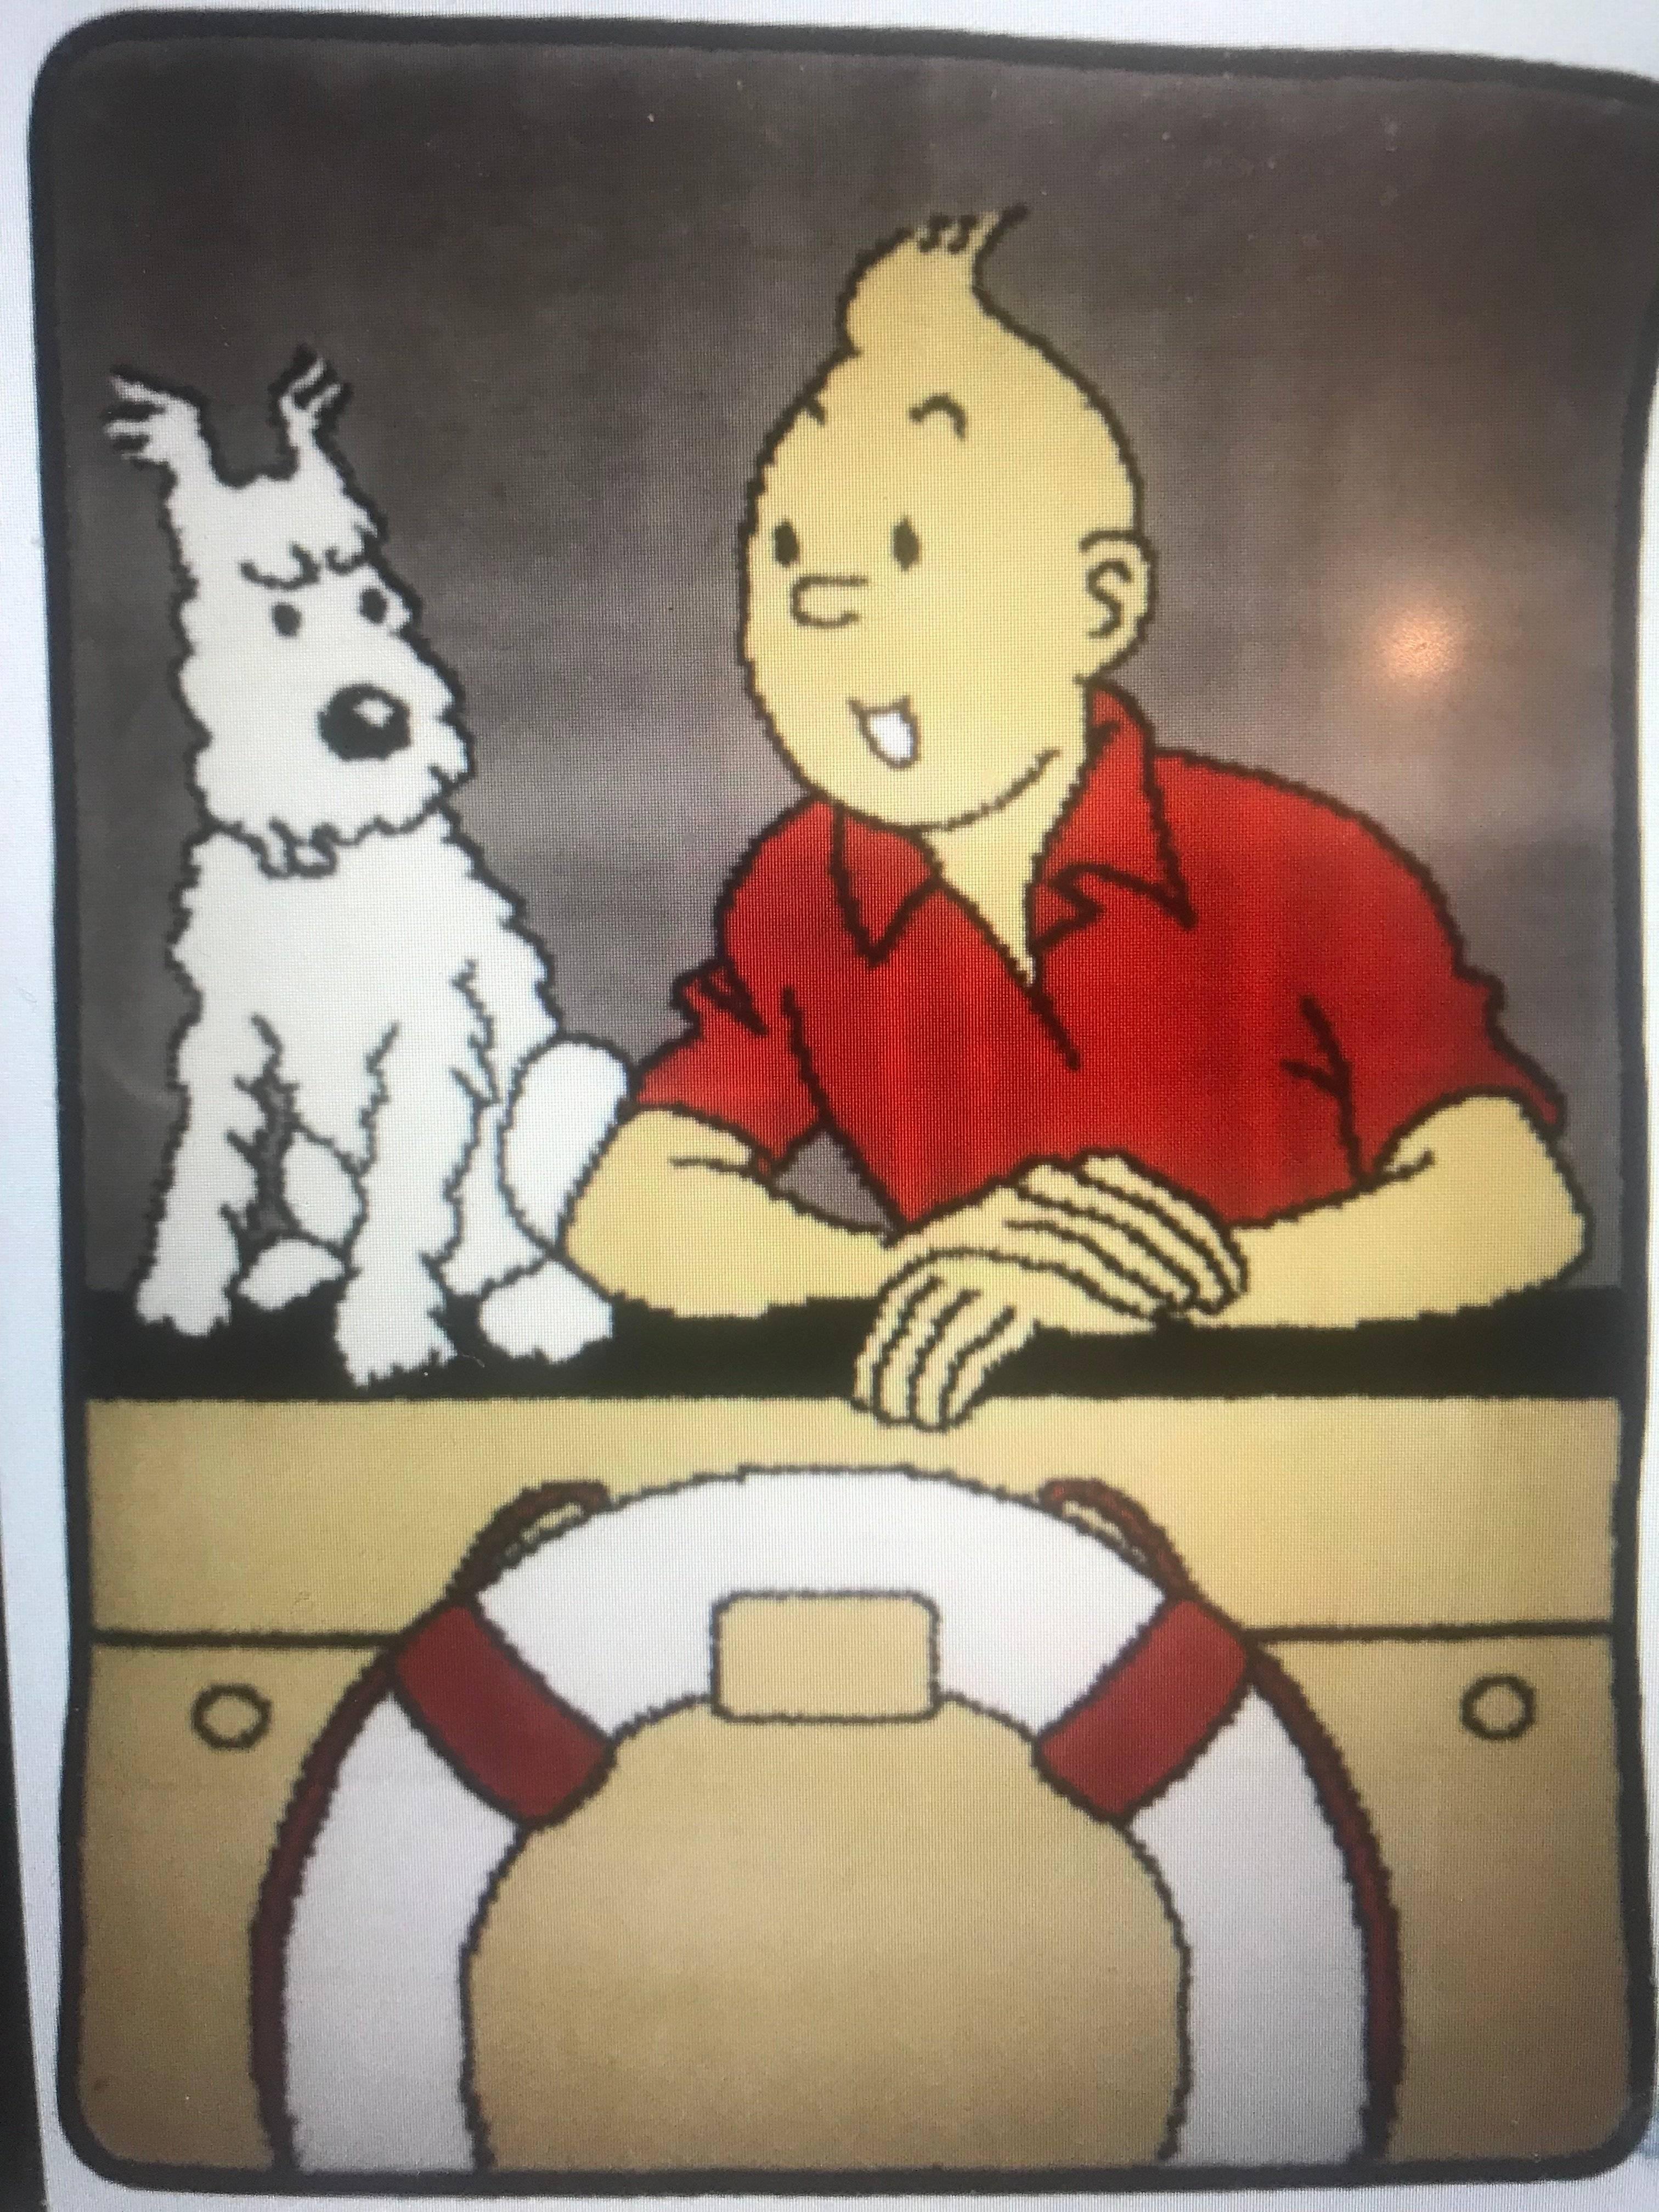 Tintin on the Boat Carpet